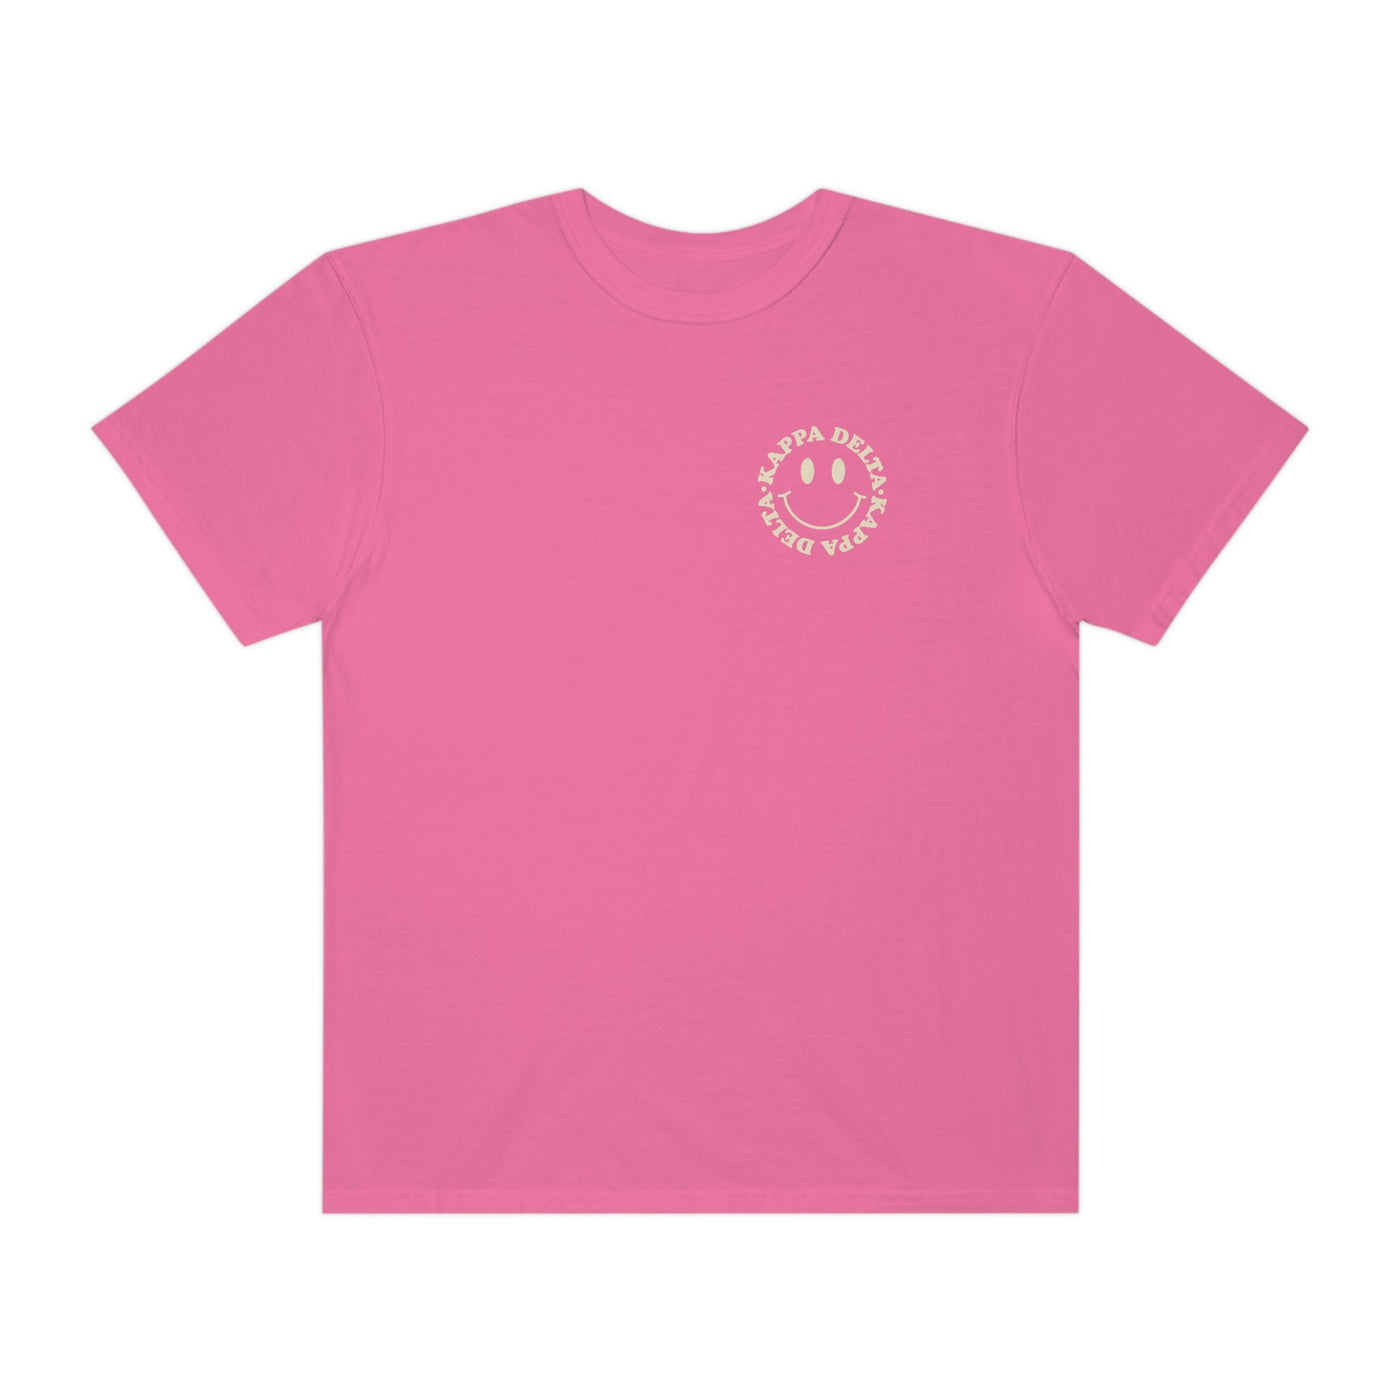 Kappa Delta Smile Sorority Comfy T-Shirt